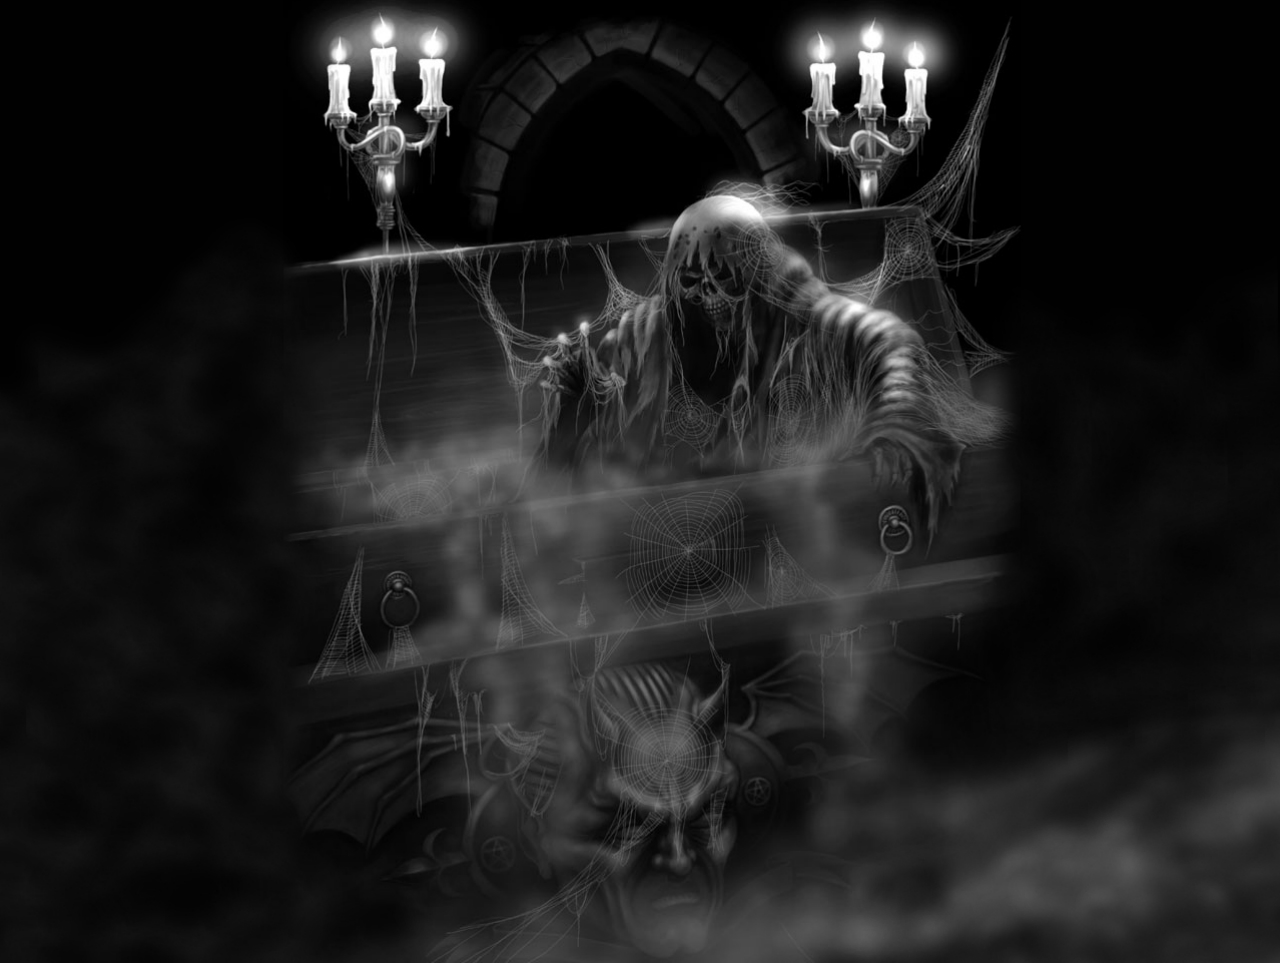 Dark Scary Grunge Wallpaper Skull Isolated Stock Illustration 569459332   Shutterstock